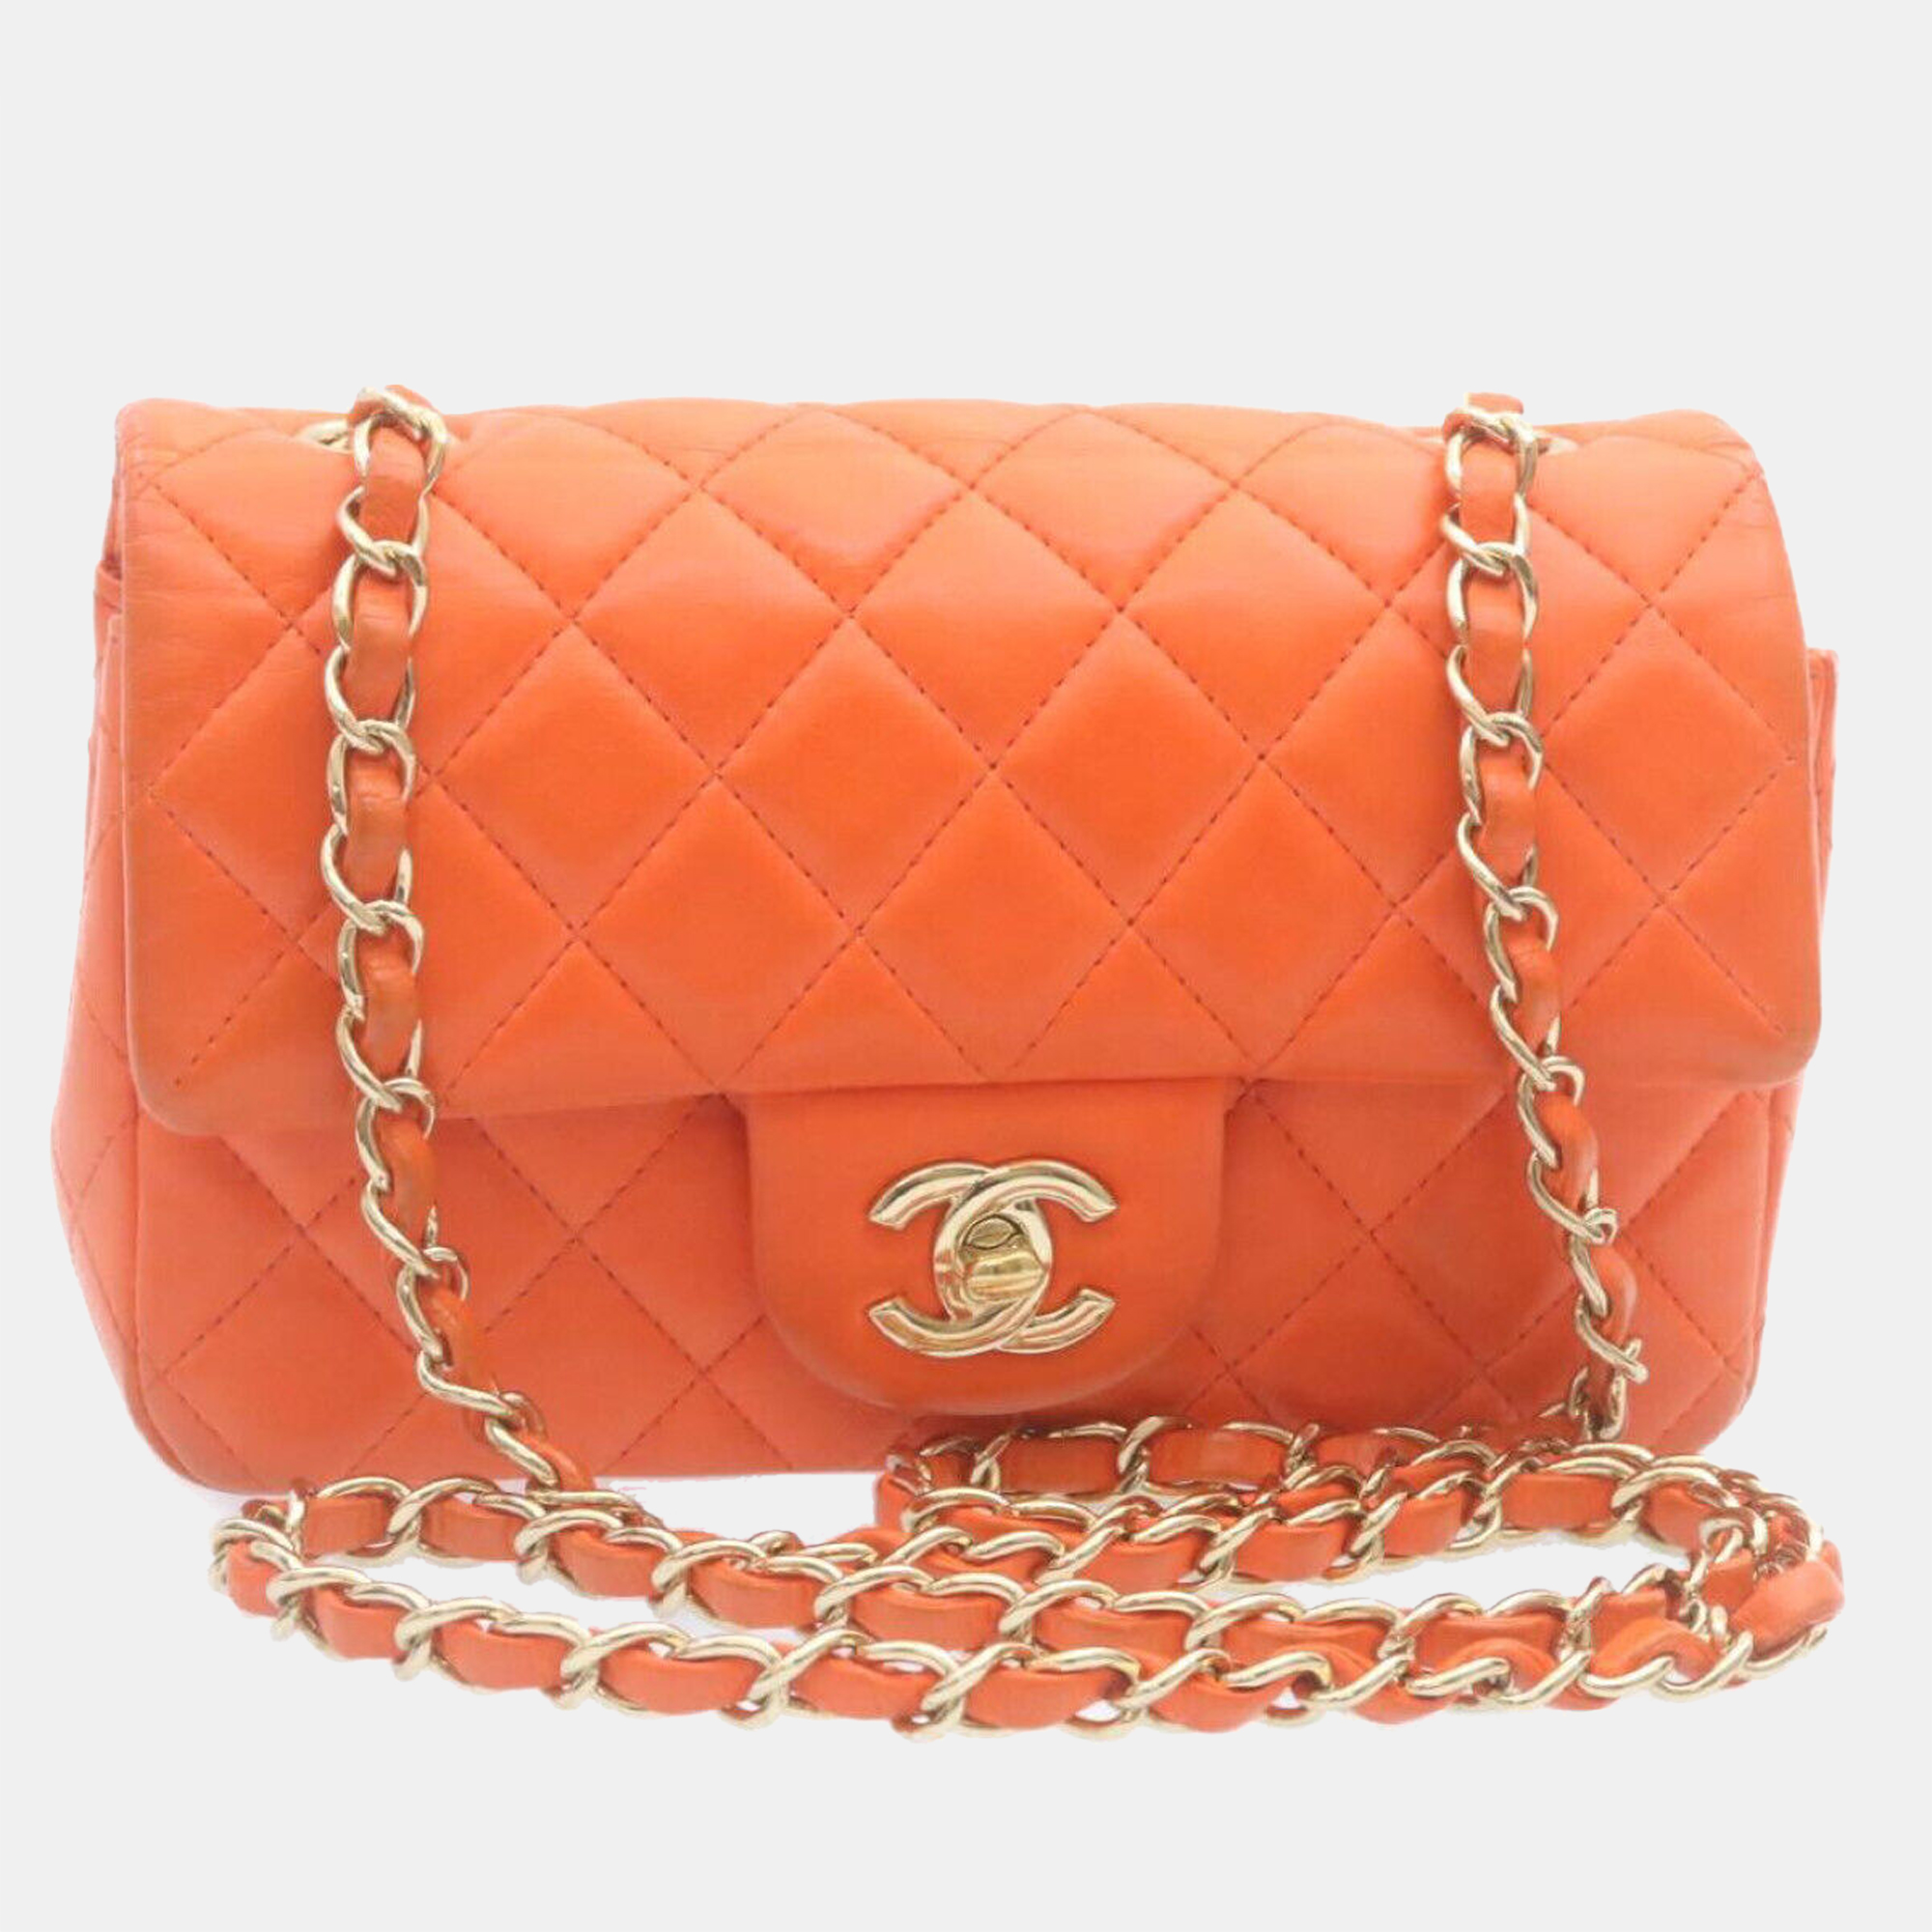 Chanel orange leather mini flap